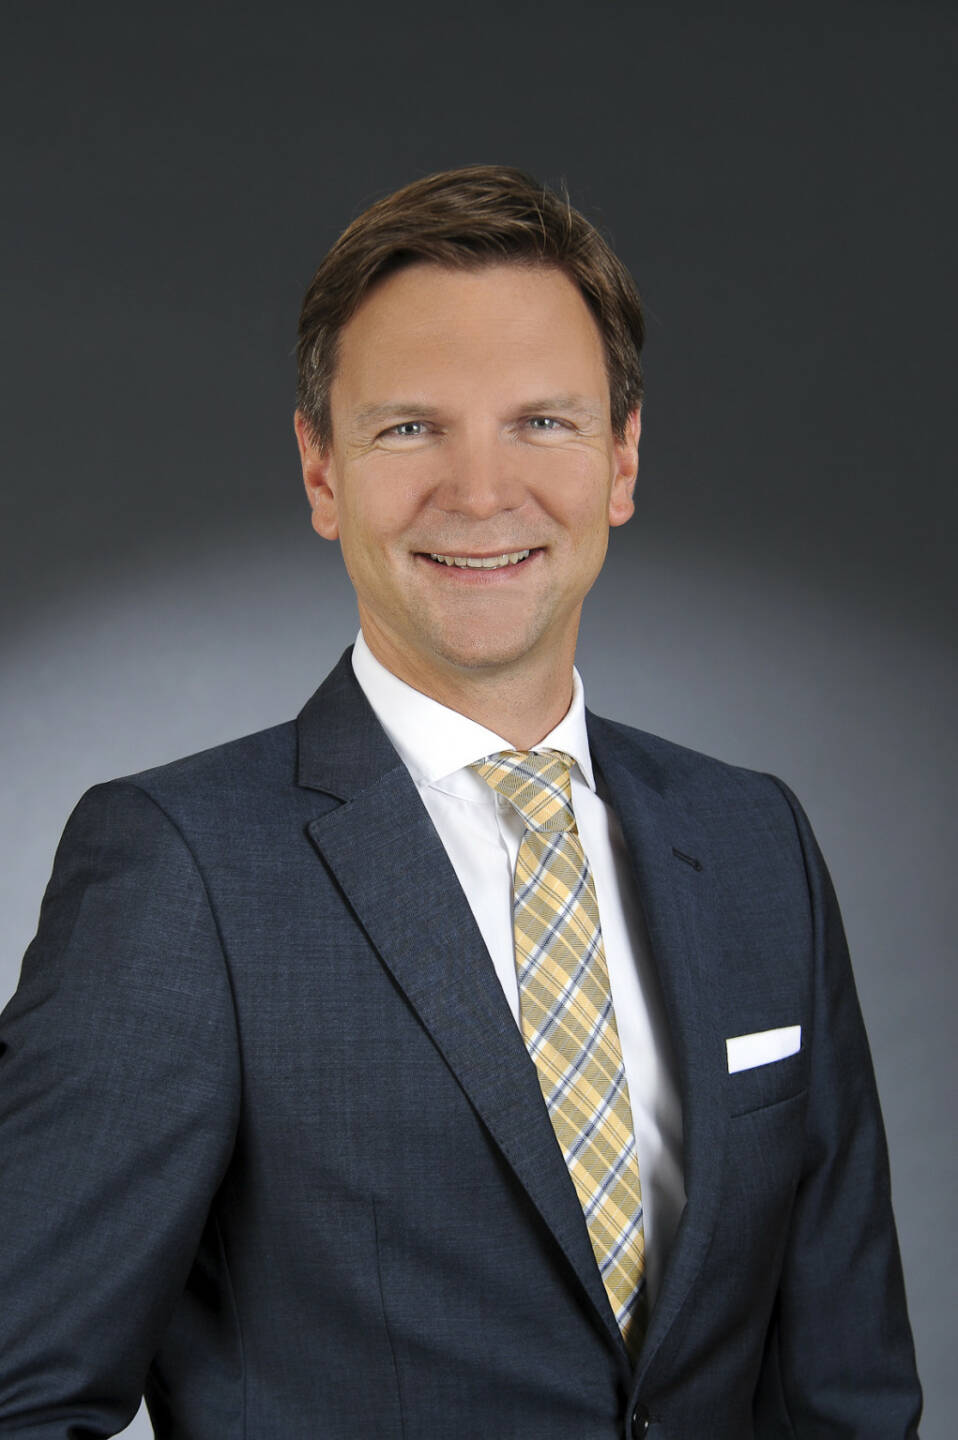 Christian Janas, Leiter Vermögensverwaltung bei DJE, Credit: DJE